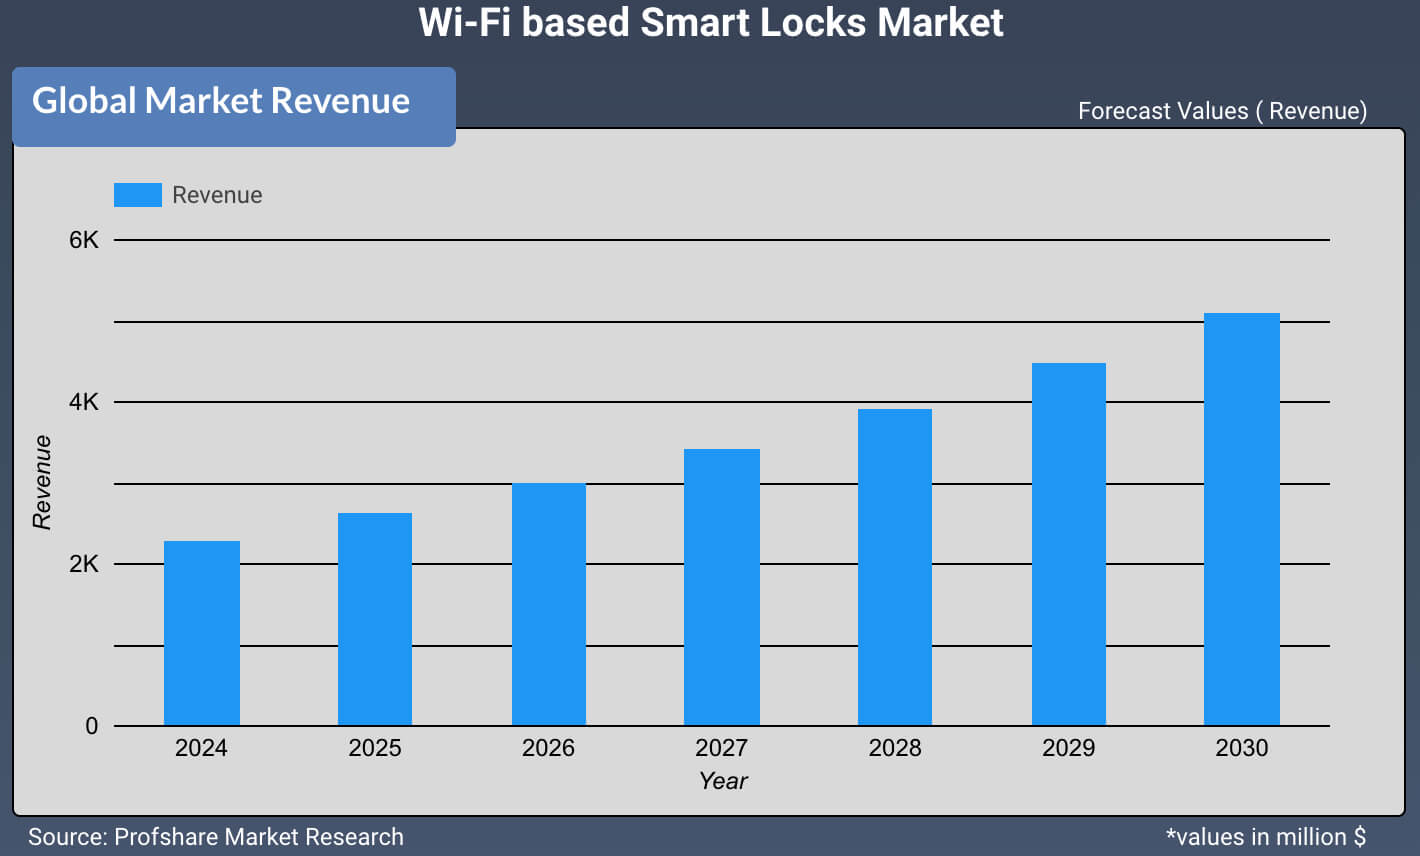 Wi-Fi based Smart Locks Market